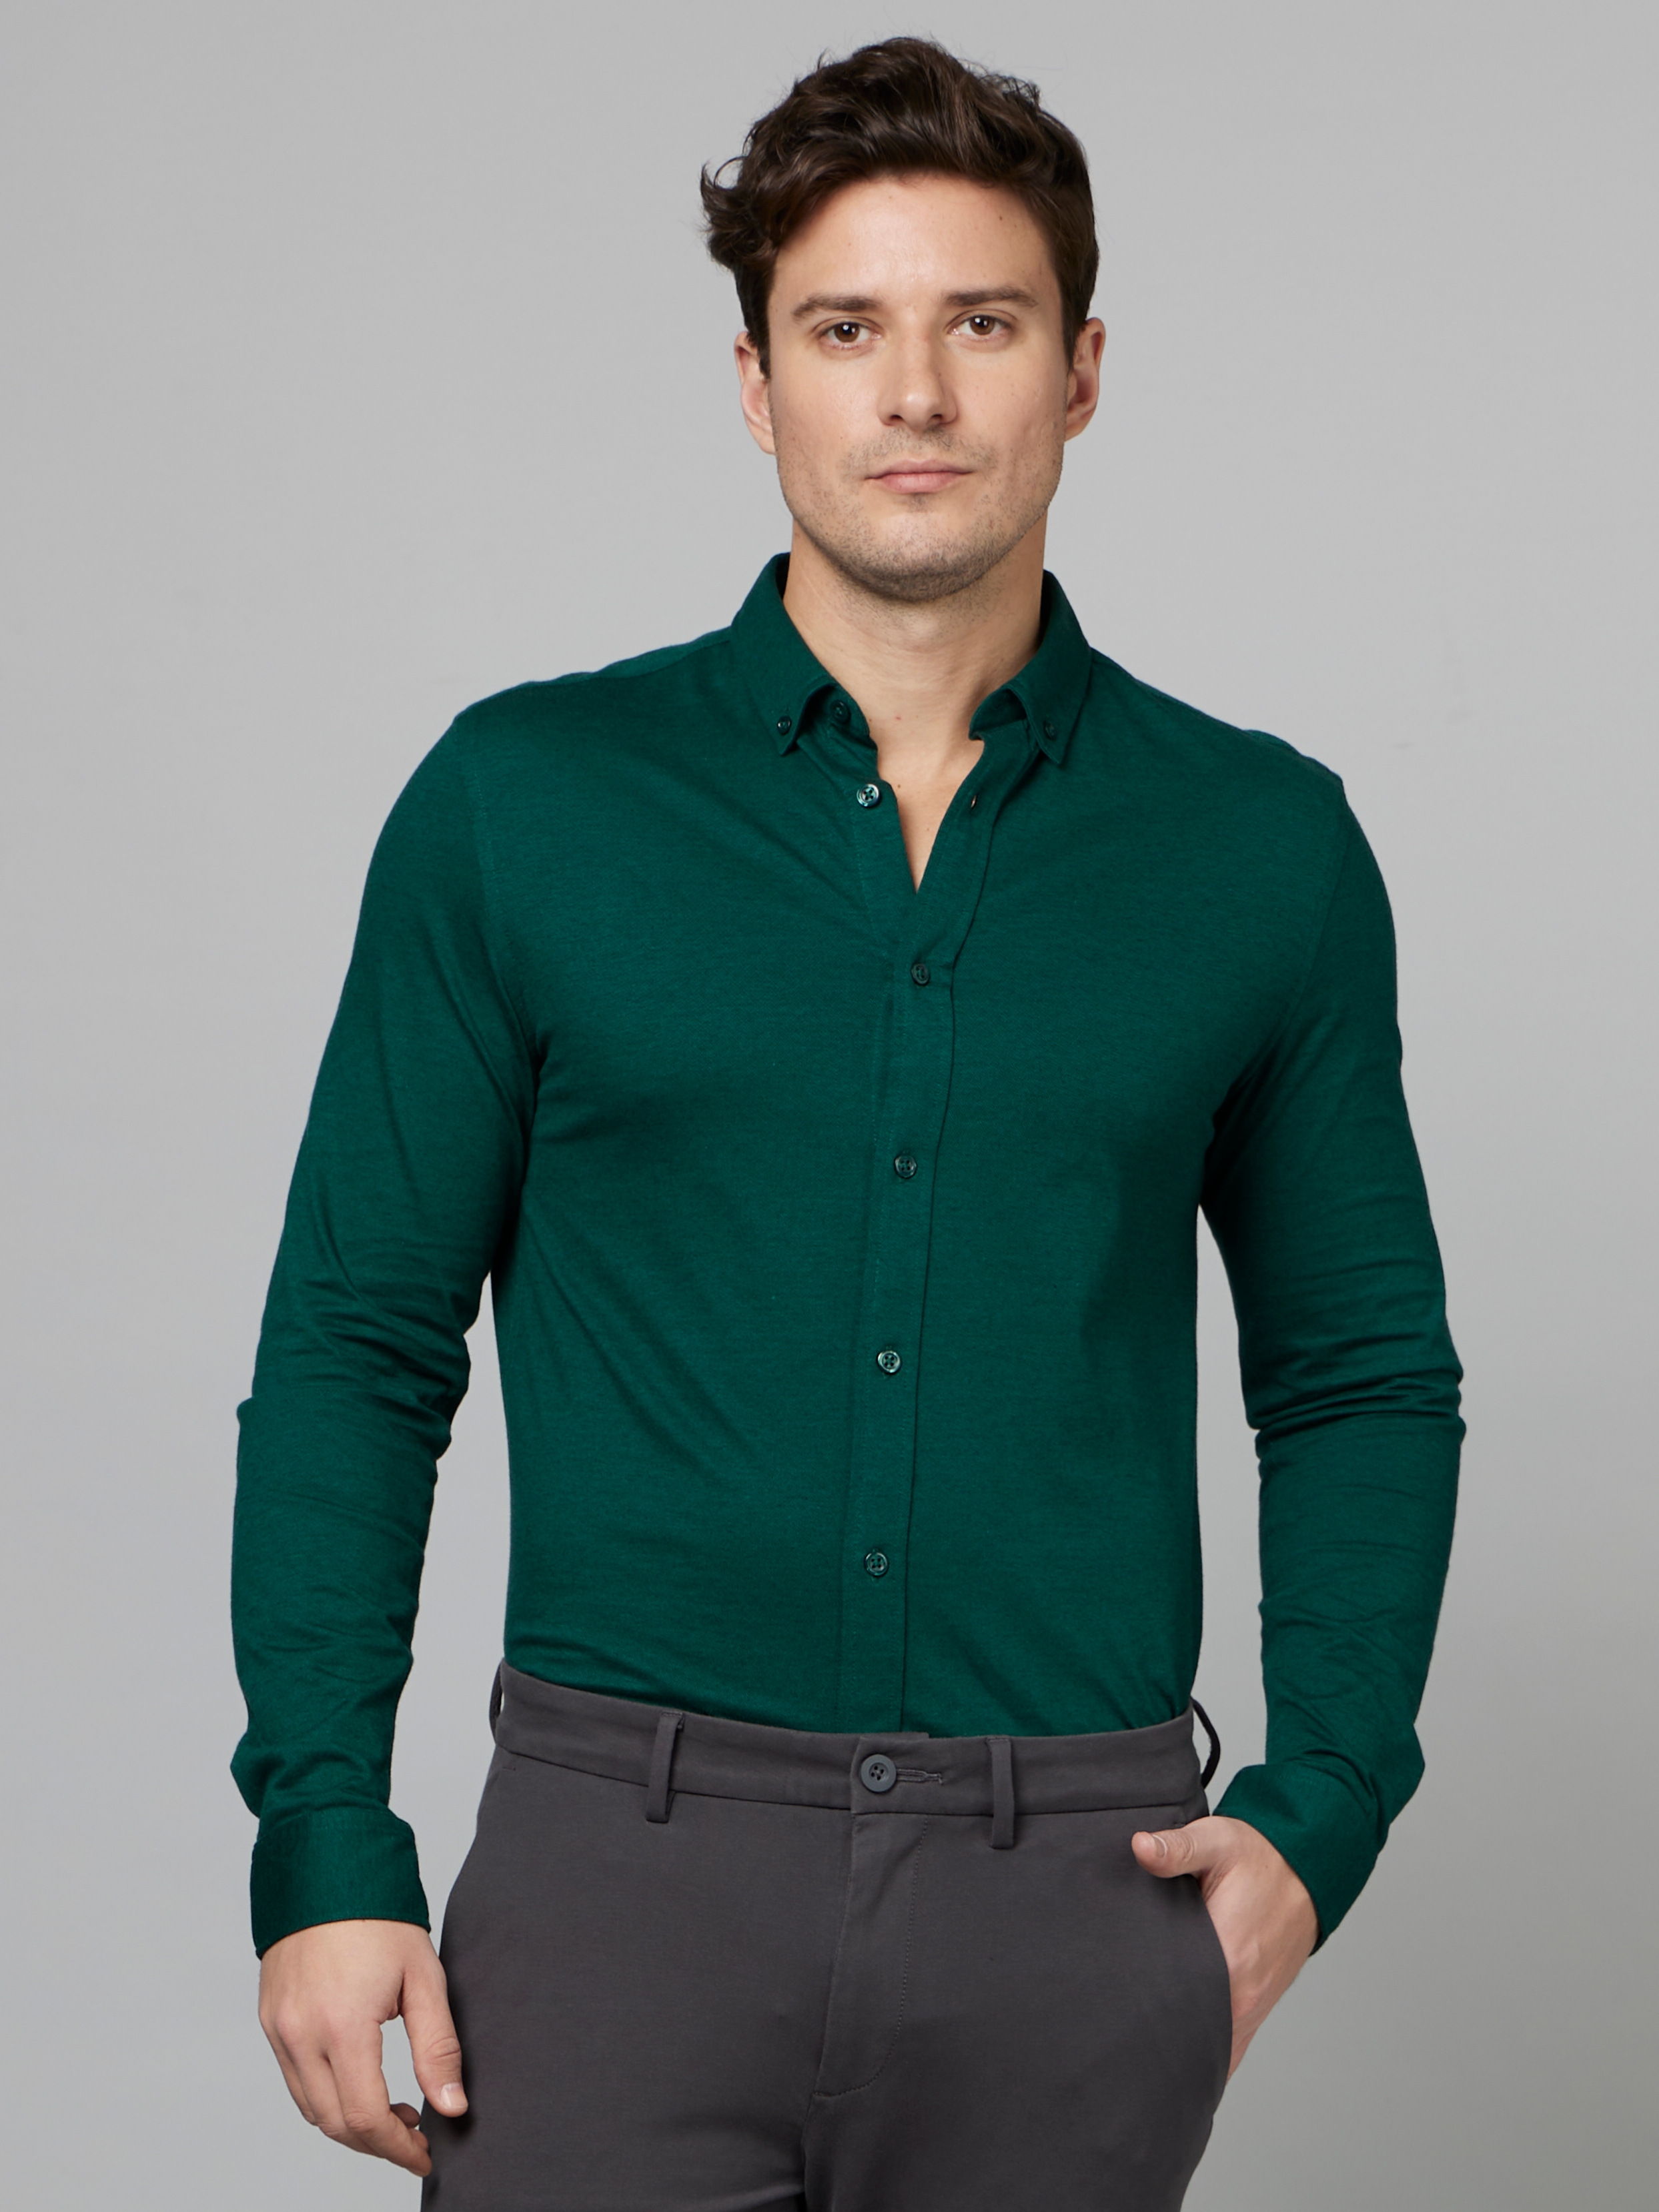 Men's Green Textured Formal Shirts